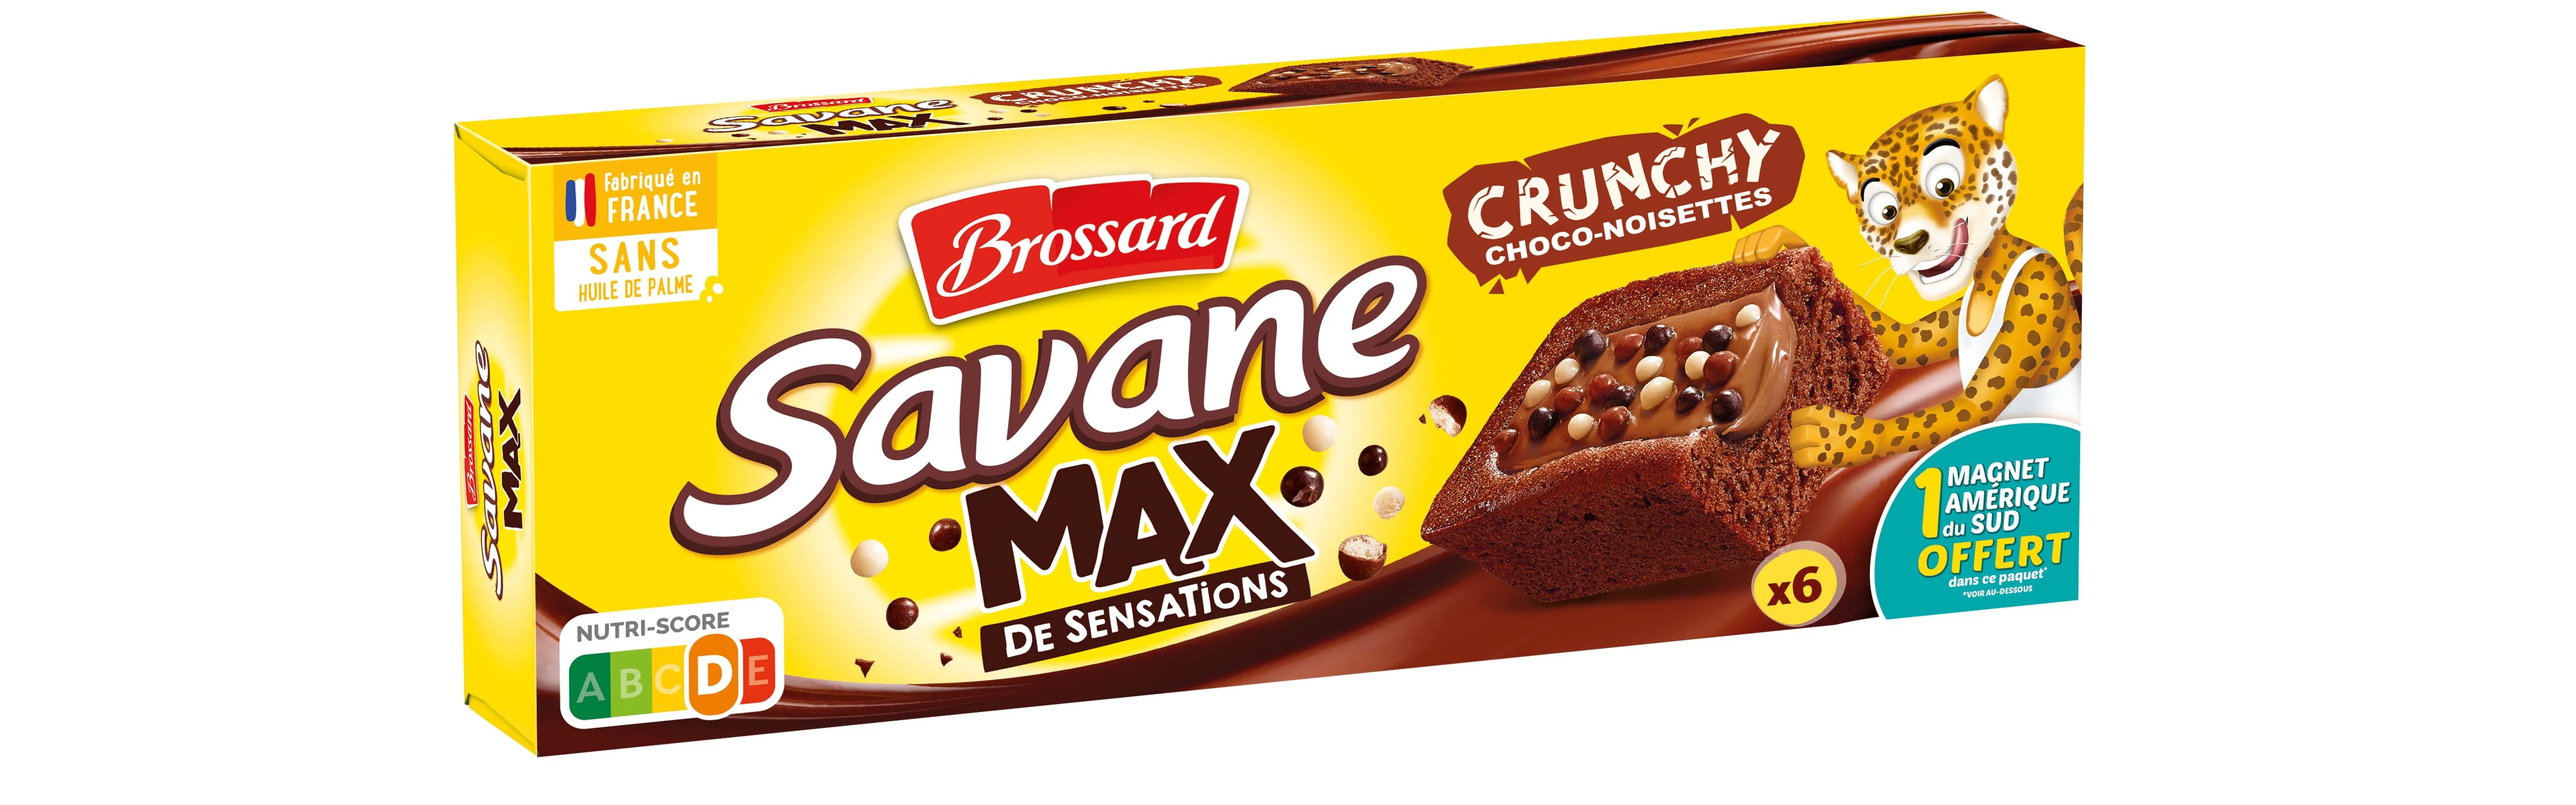 Savane Max Crunchy X 6 180г